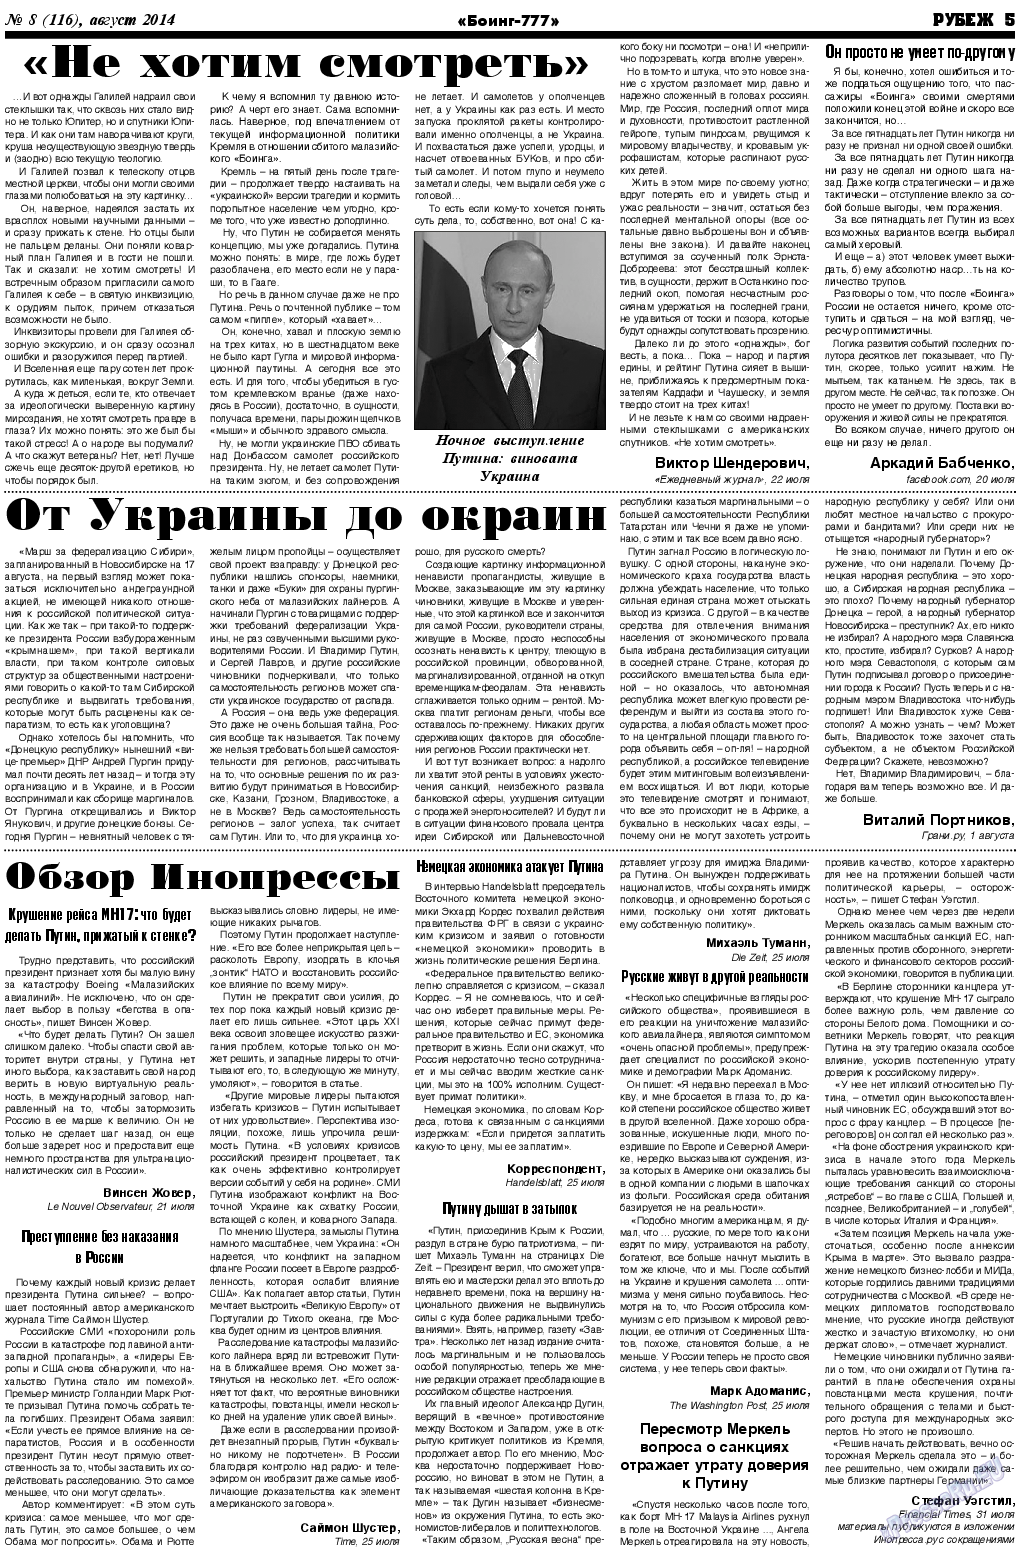 Рубеж, газета. 2014 №8 стр.5